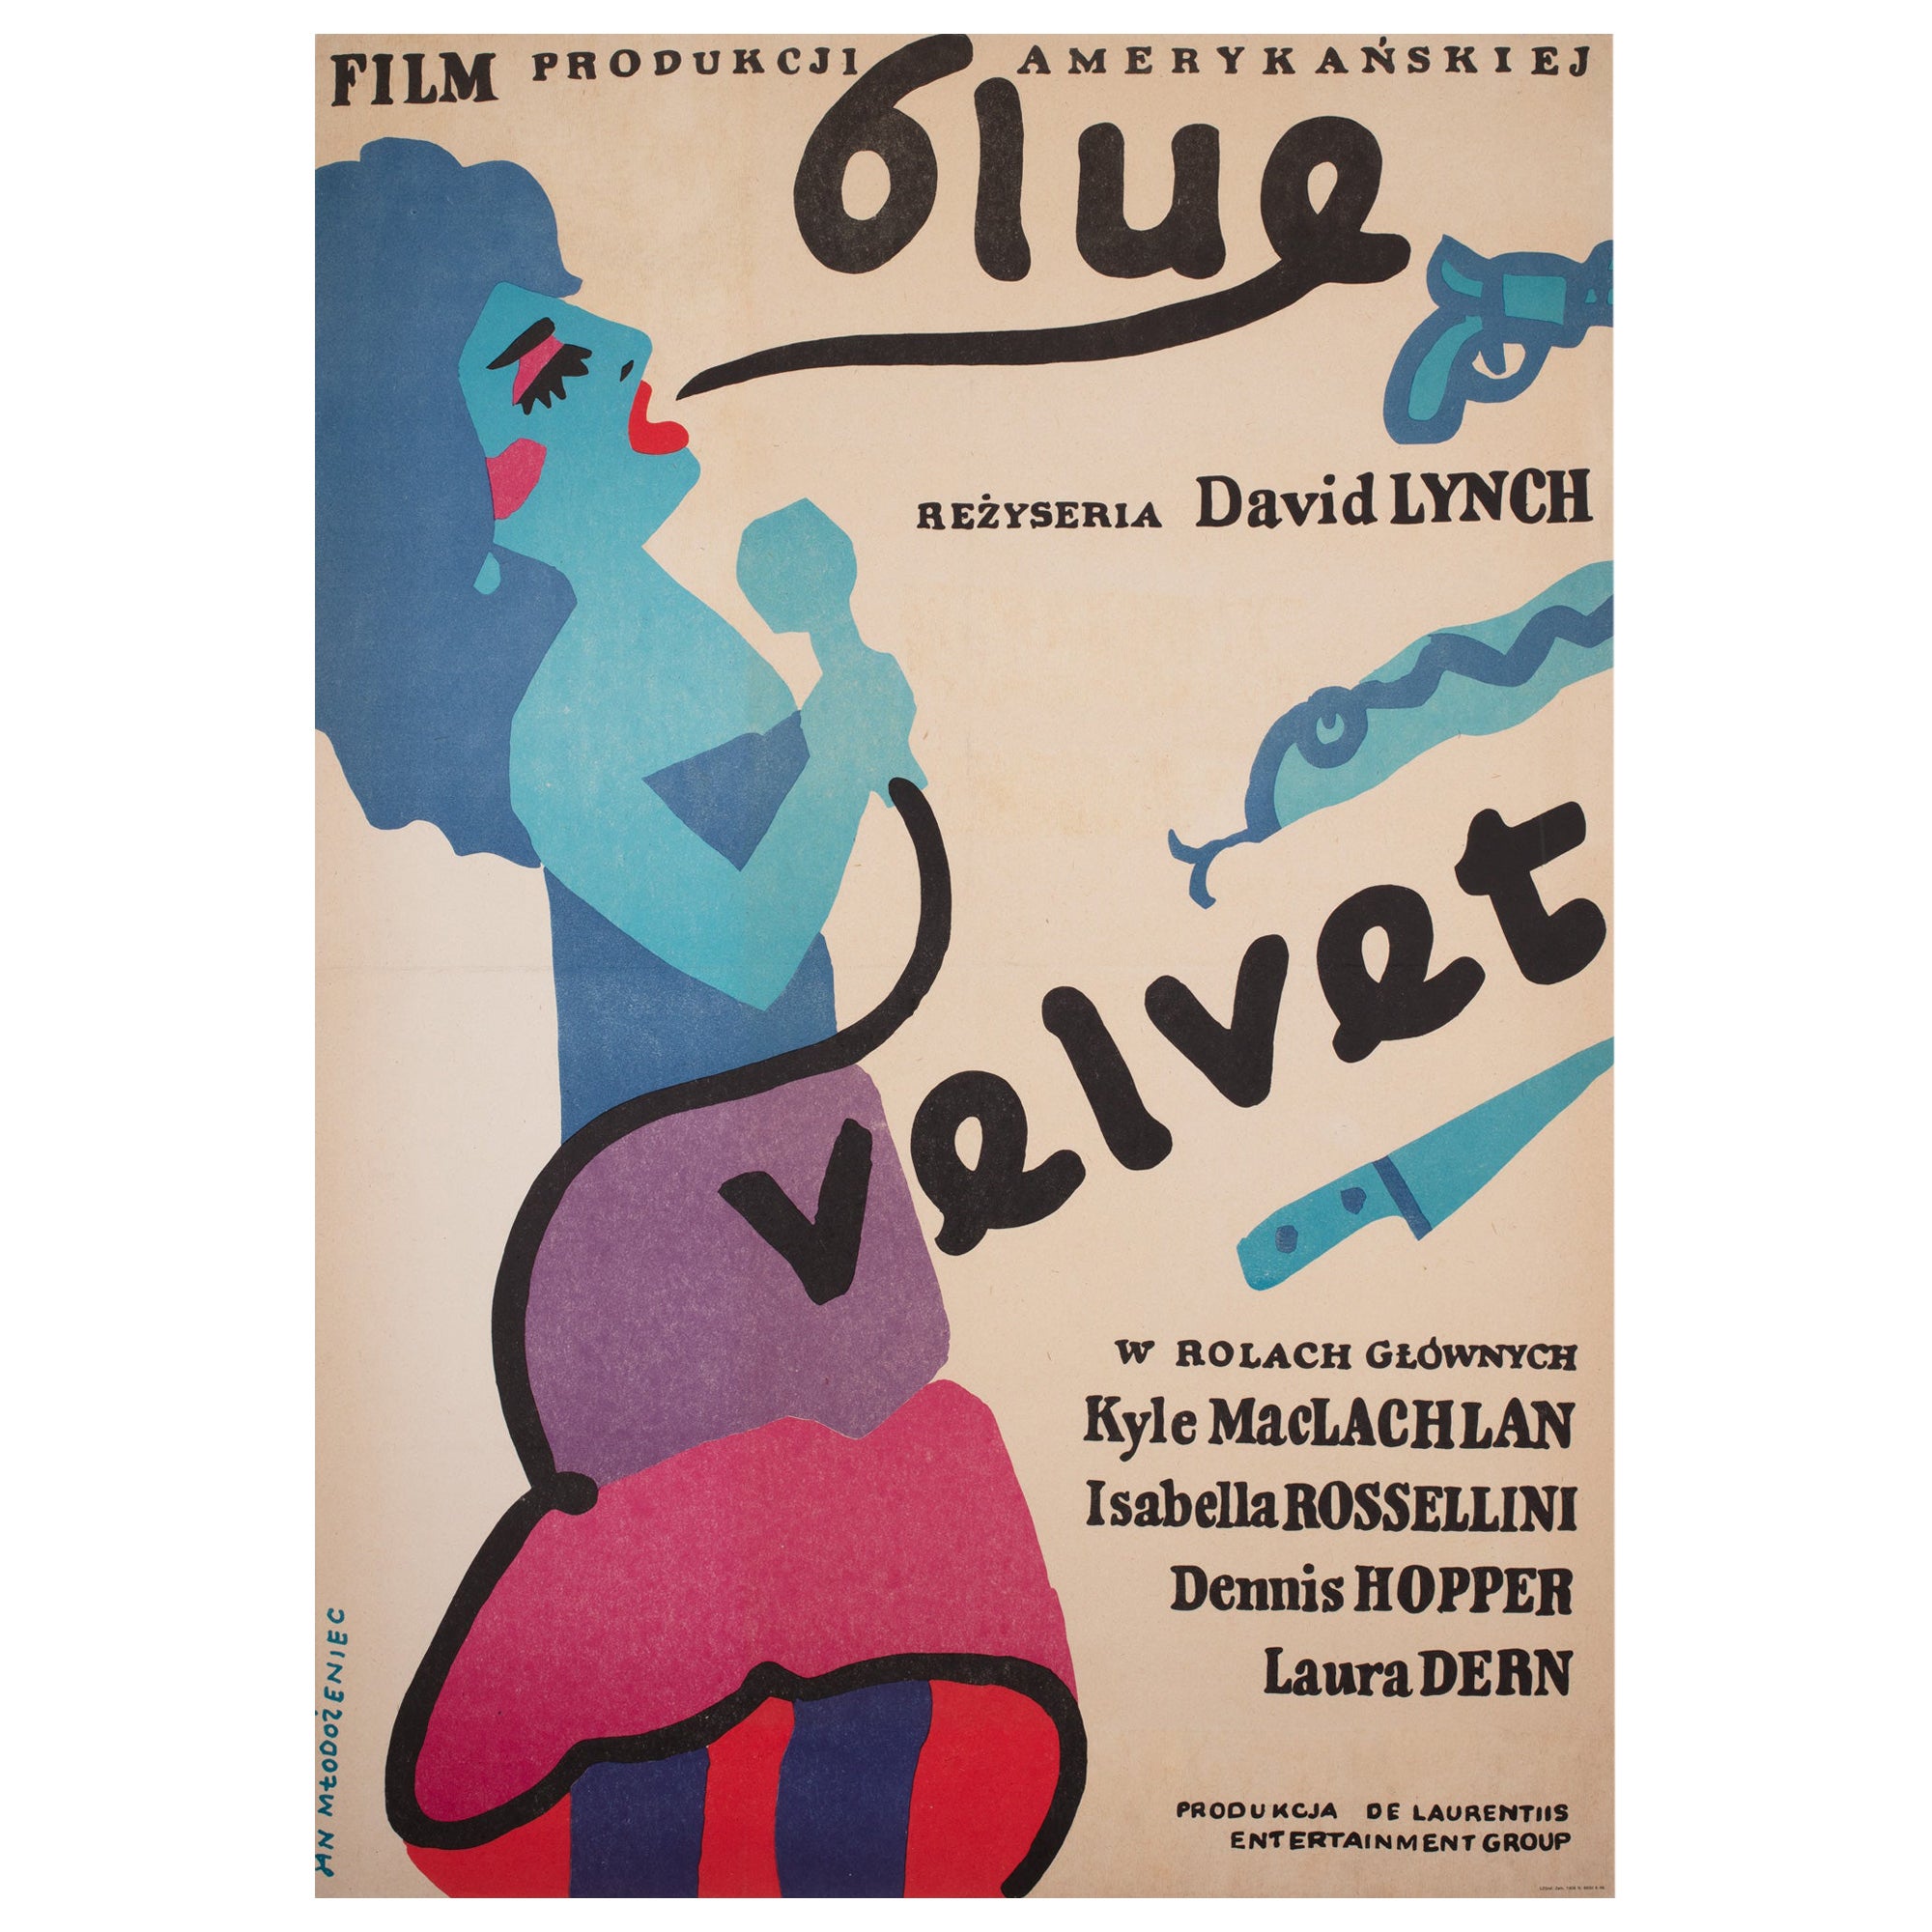 Blue Velvet, Polish Film Movie Poster, Jan Mlodozeniec, 1987